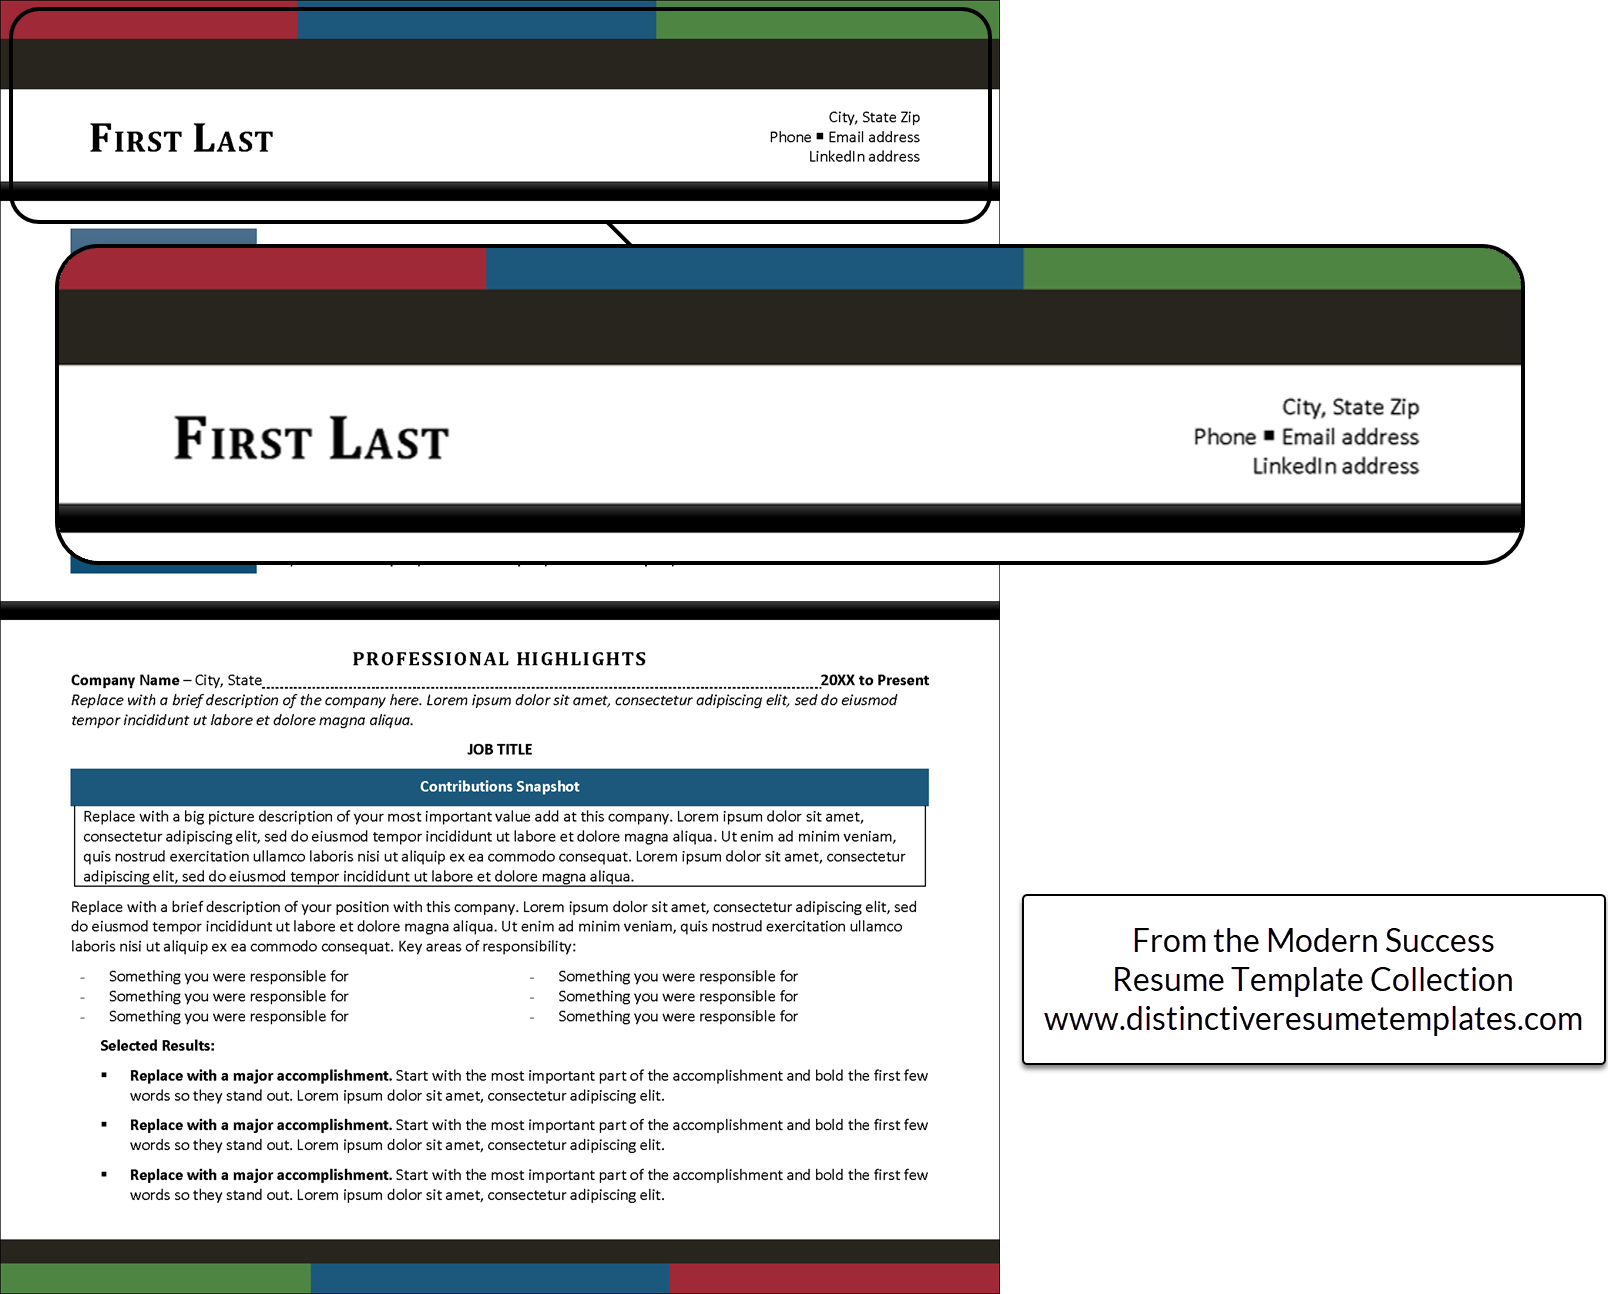 Example resume templates full justified header design 2